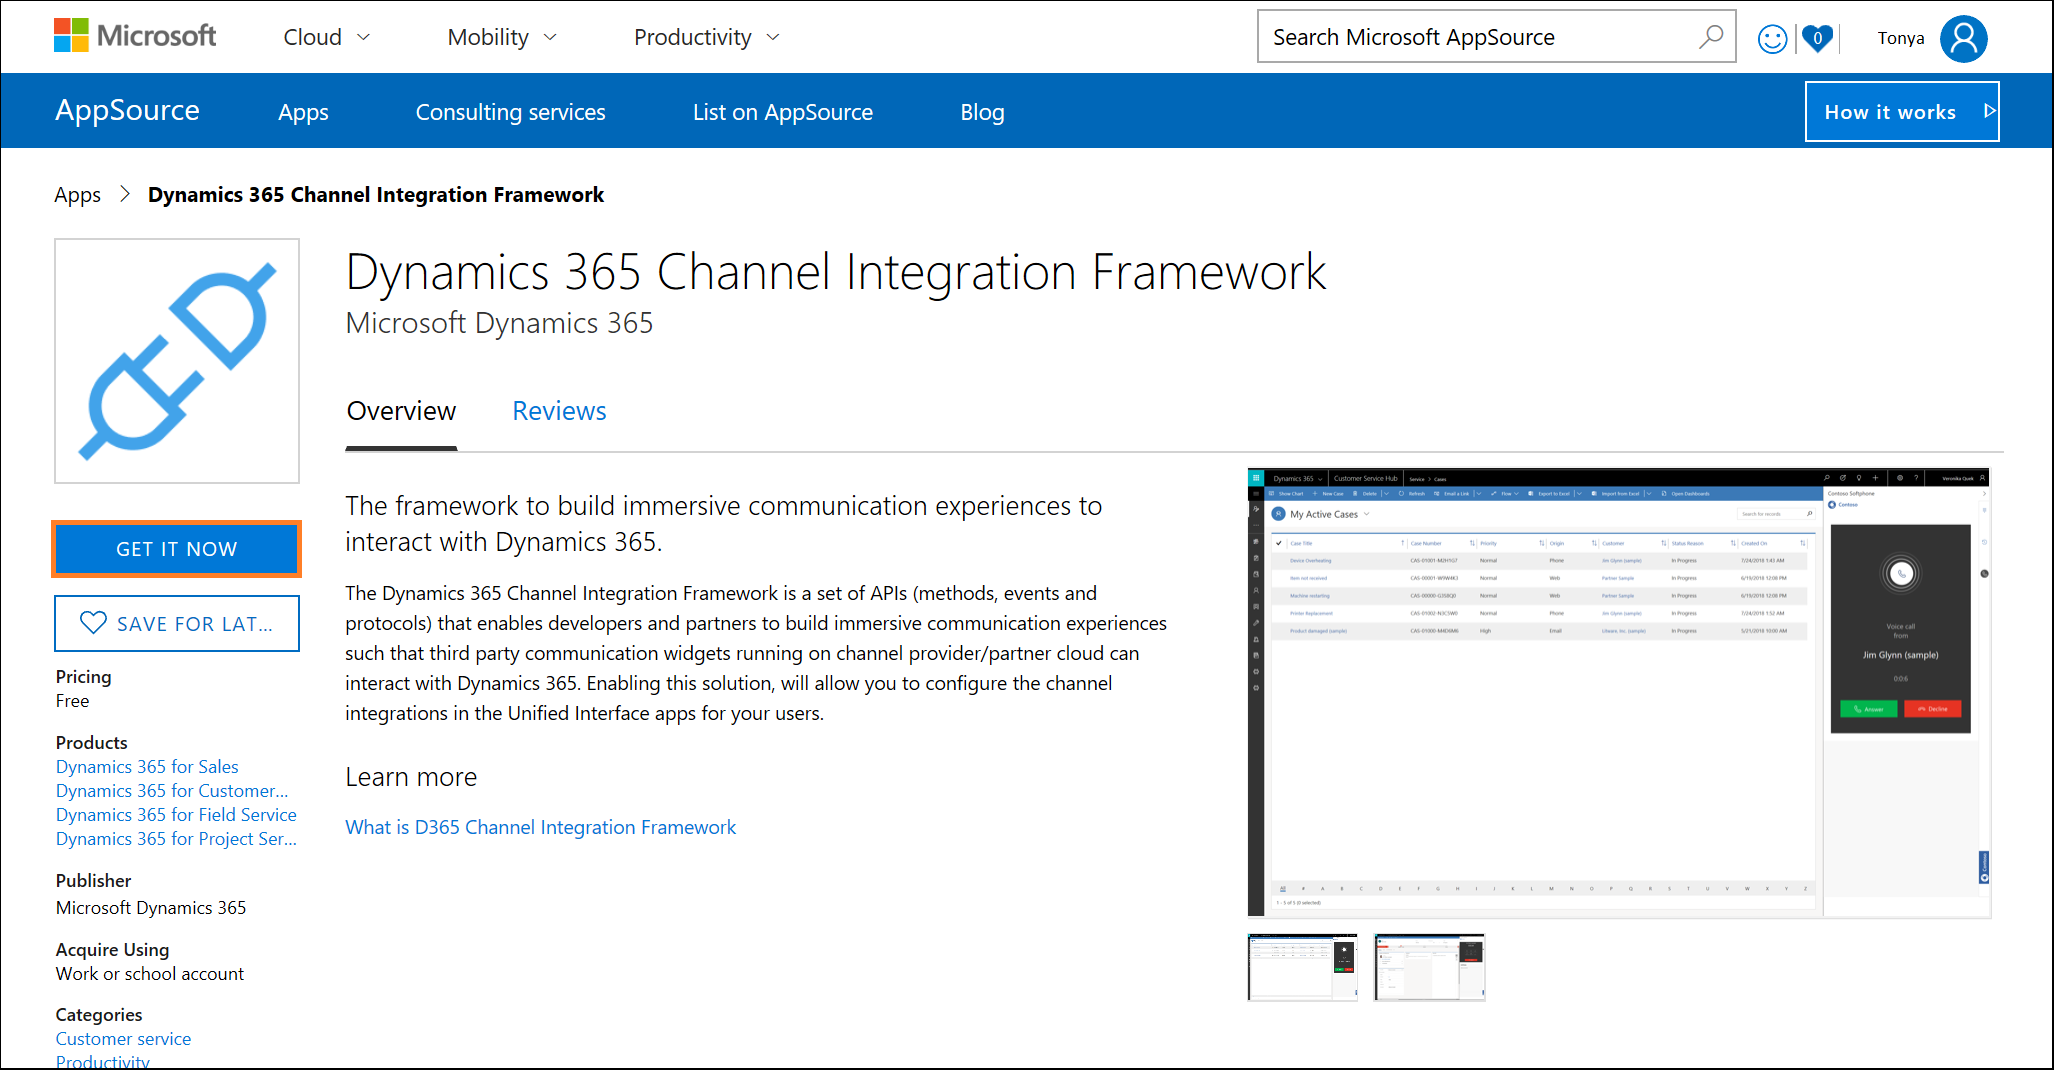 Dynamics 365 Channel Integration Framework in Microsoft AppSource.